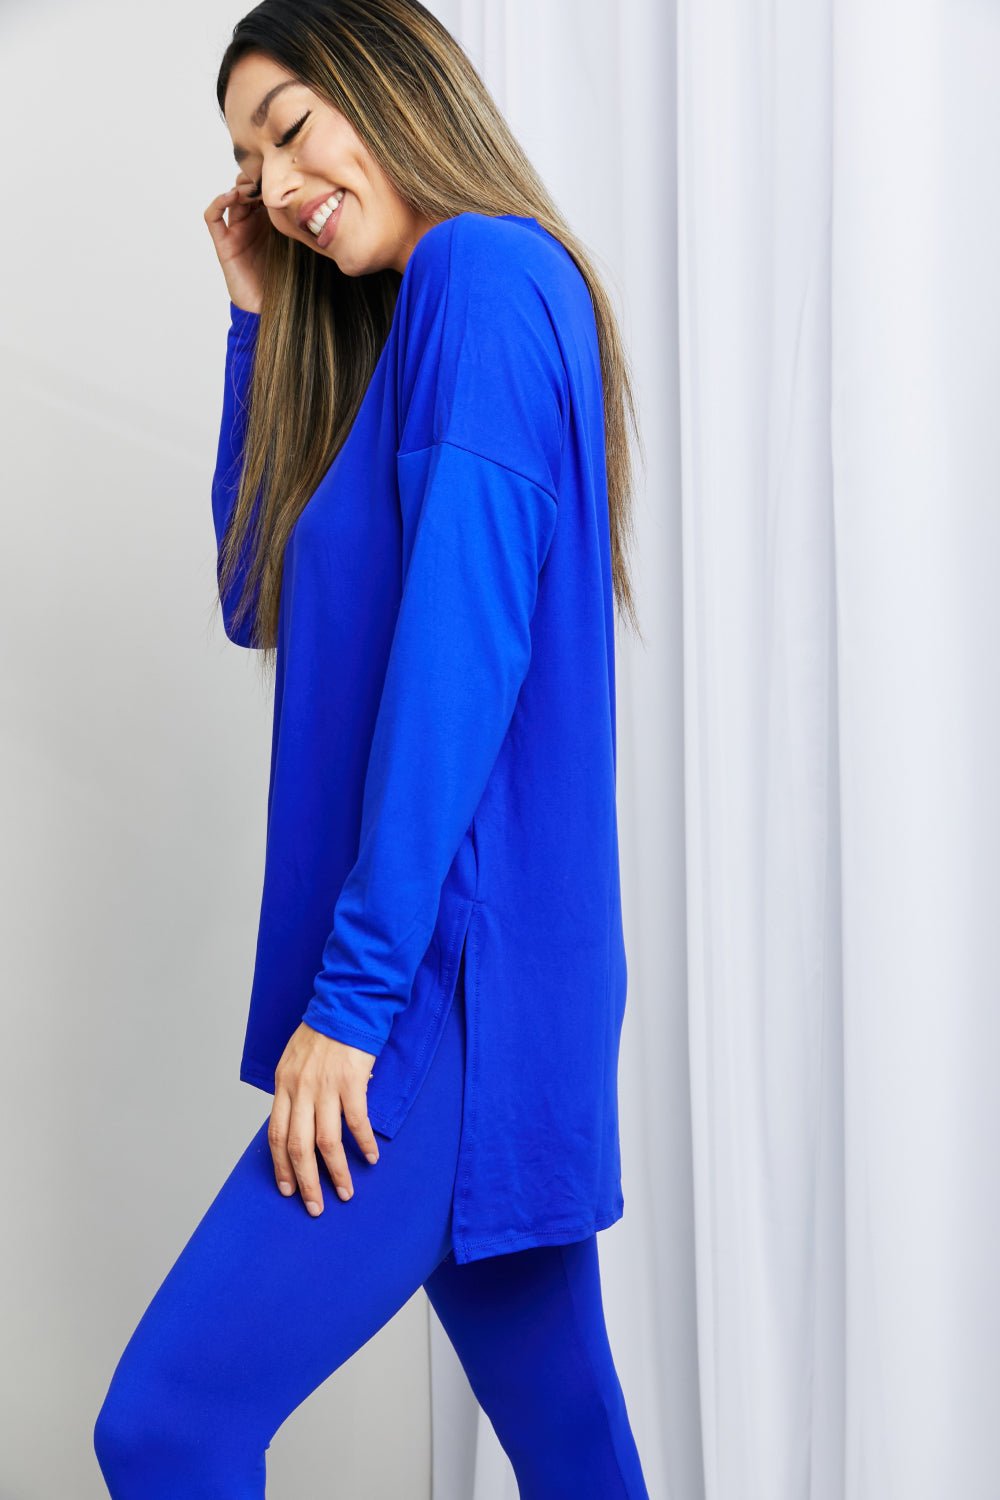 Zenana Ready to Relax Full Size Brushed Microfiber Loungewear Set in Bright Blue - Shah S. Sahota